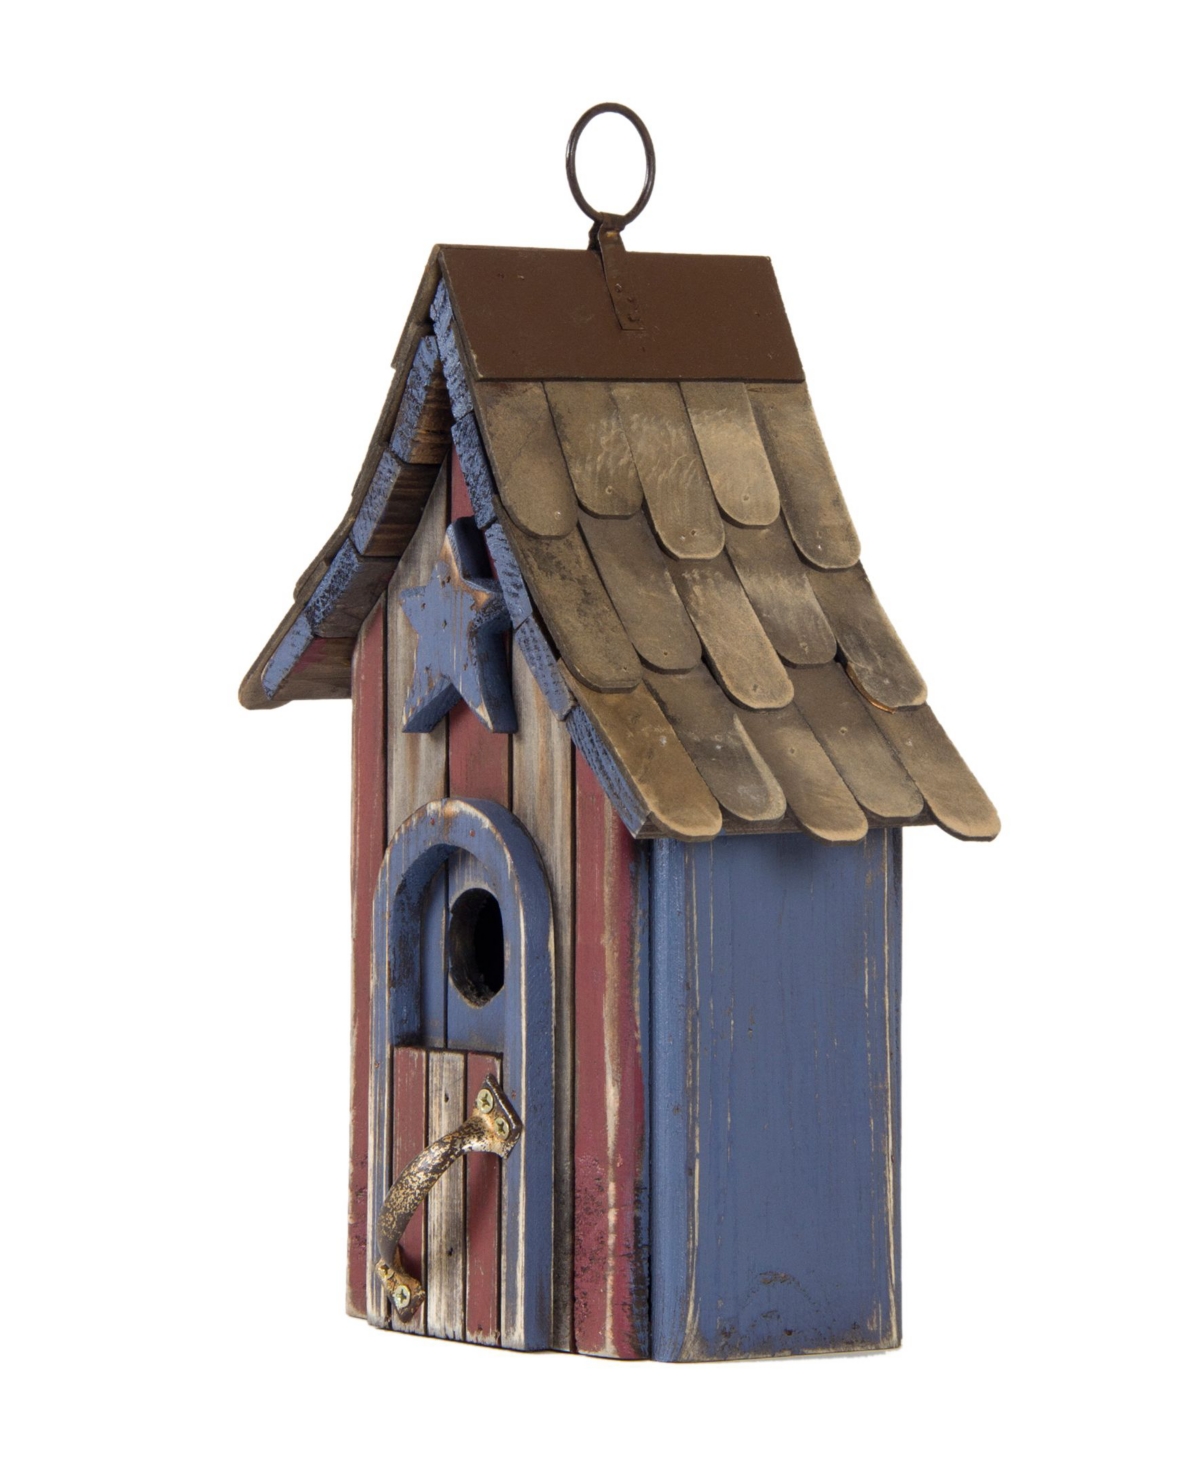 Hanging Distressed Solid Wood Garden Birdhouse - Indigo